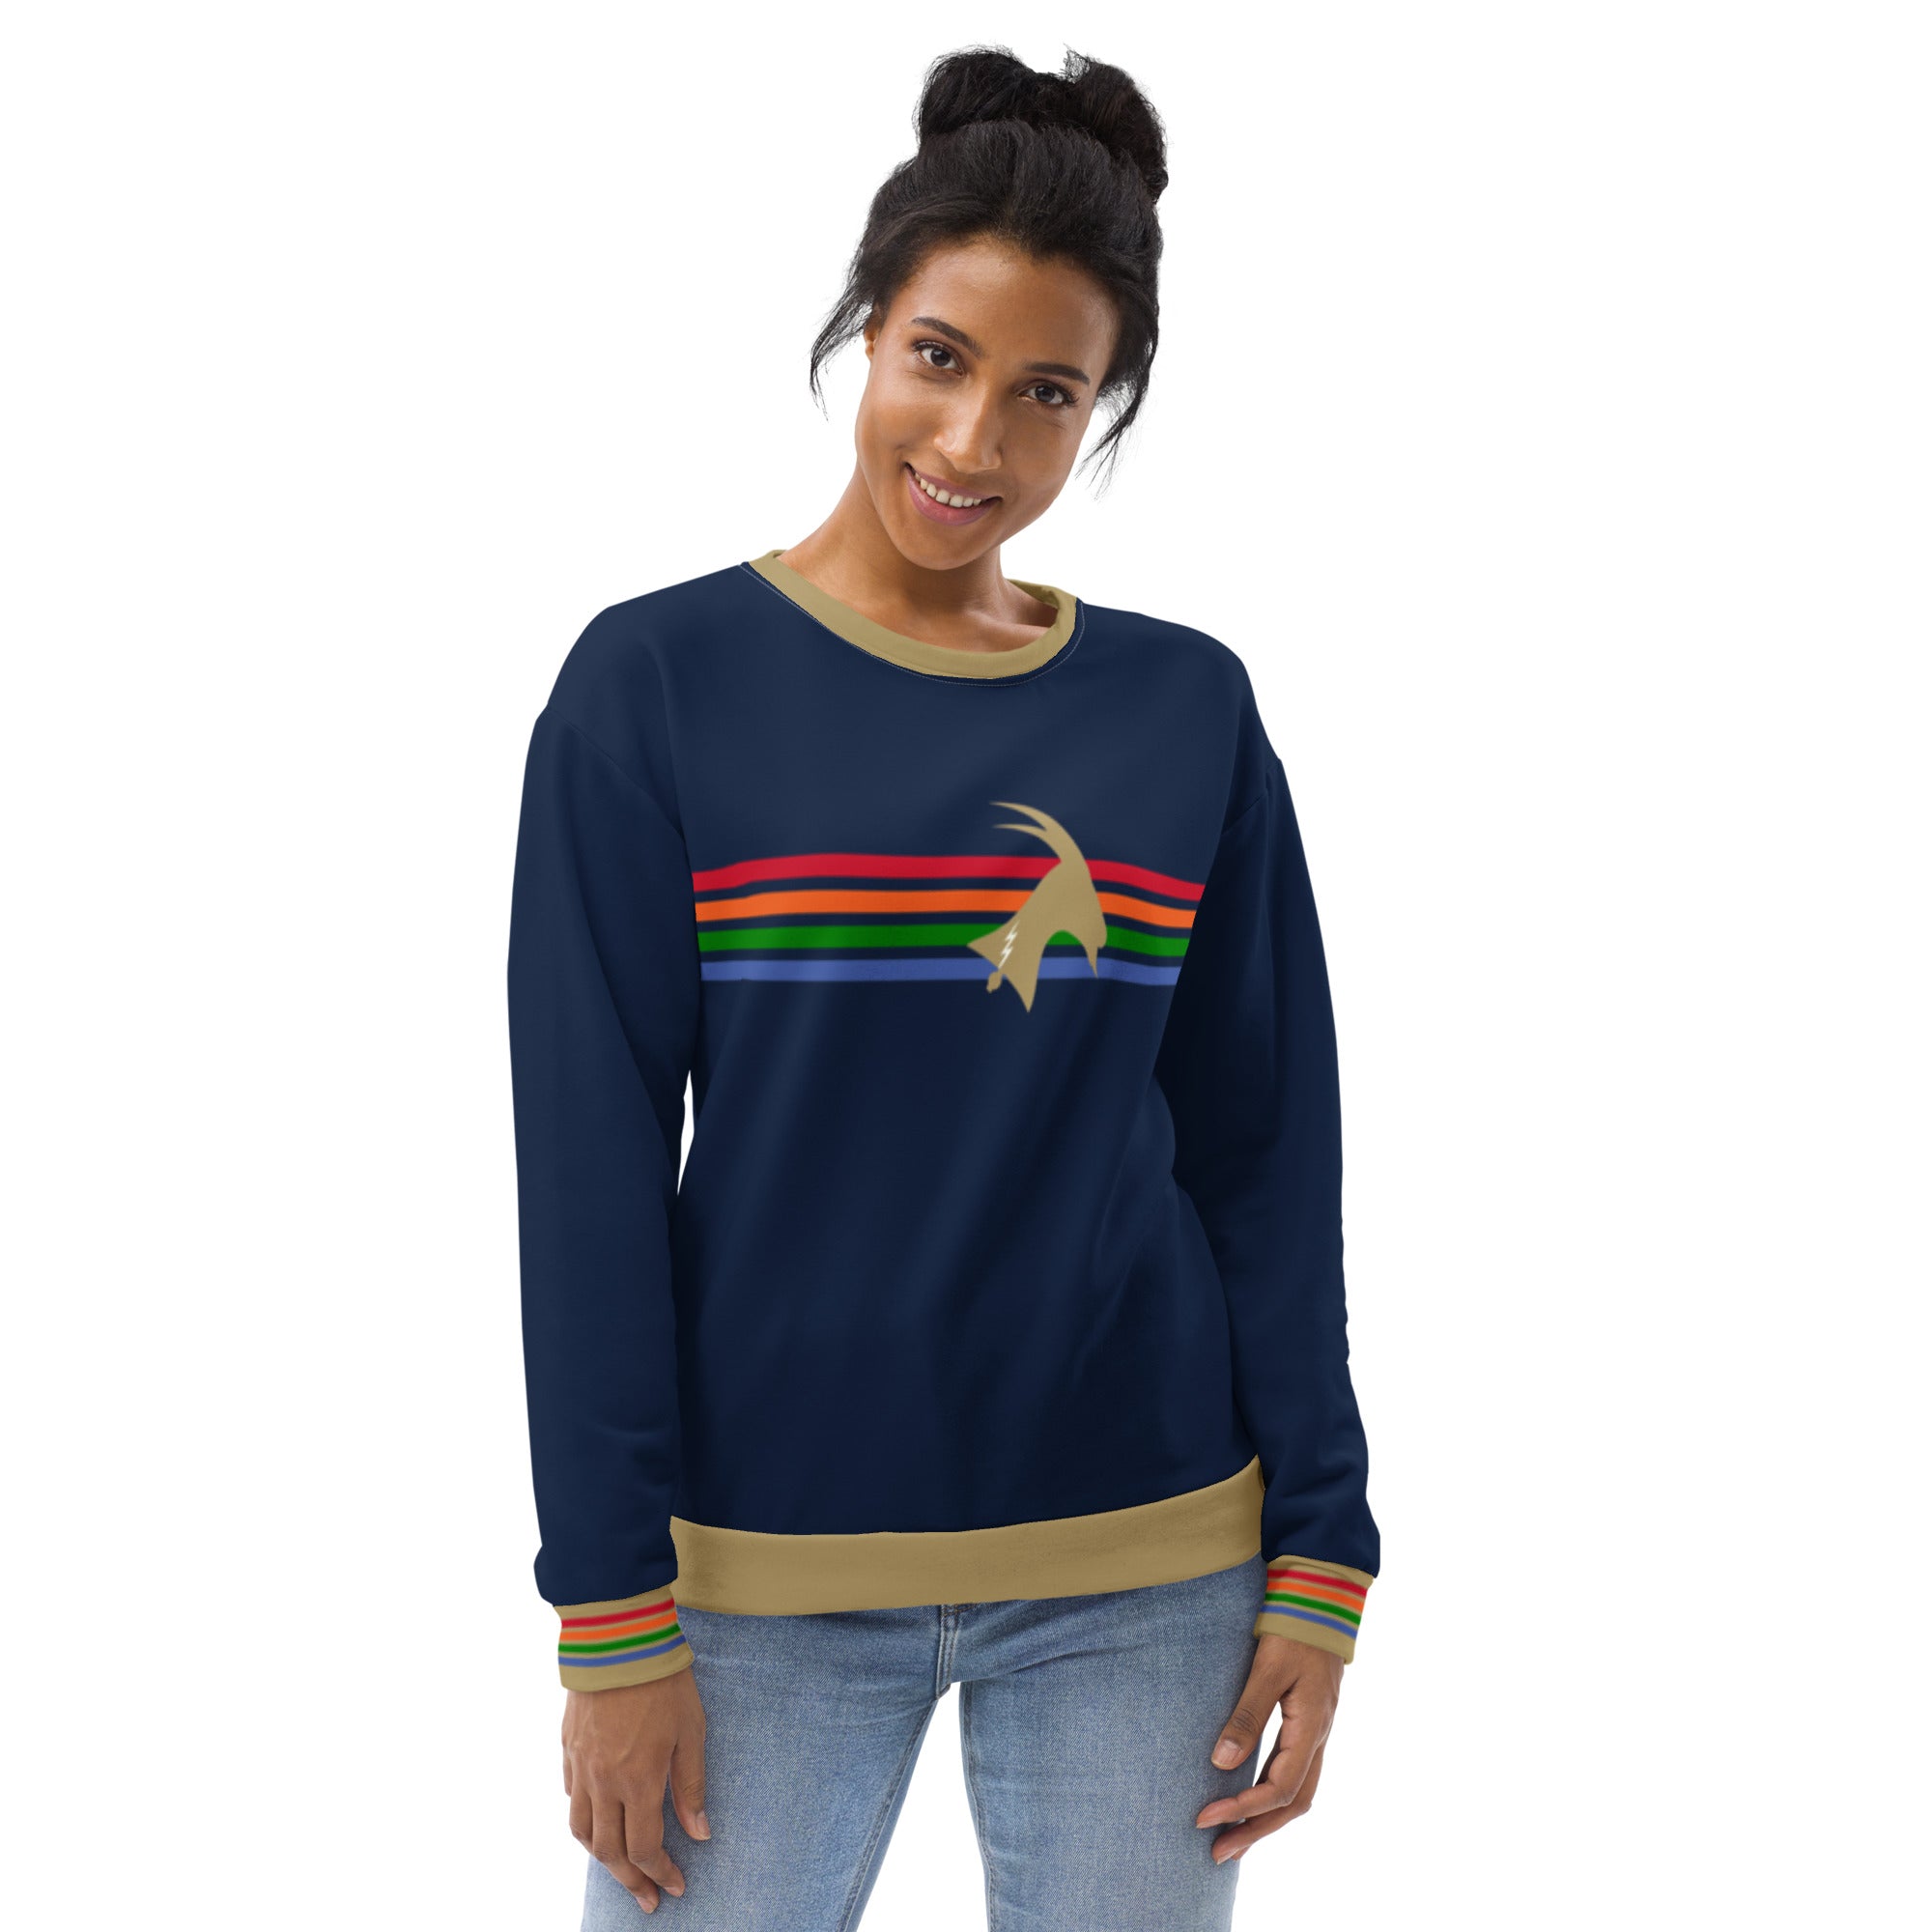 "Phillygoat Spectrum Vibes" All-Over Sweatshirt